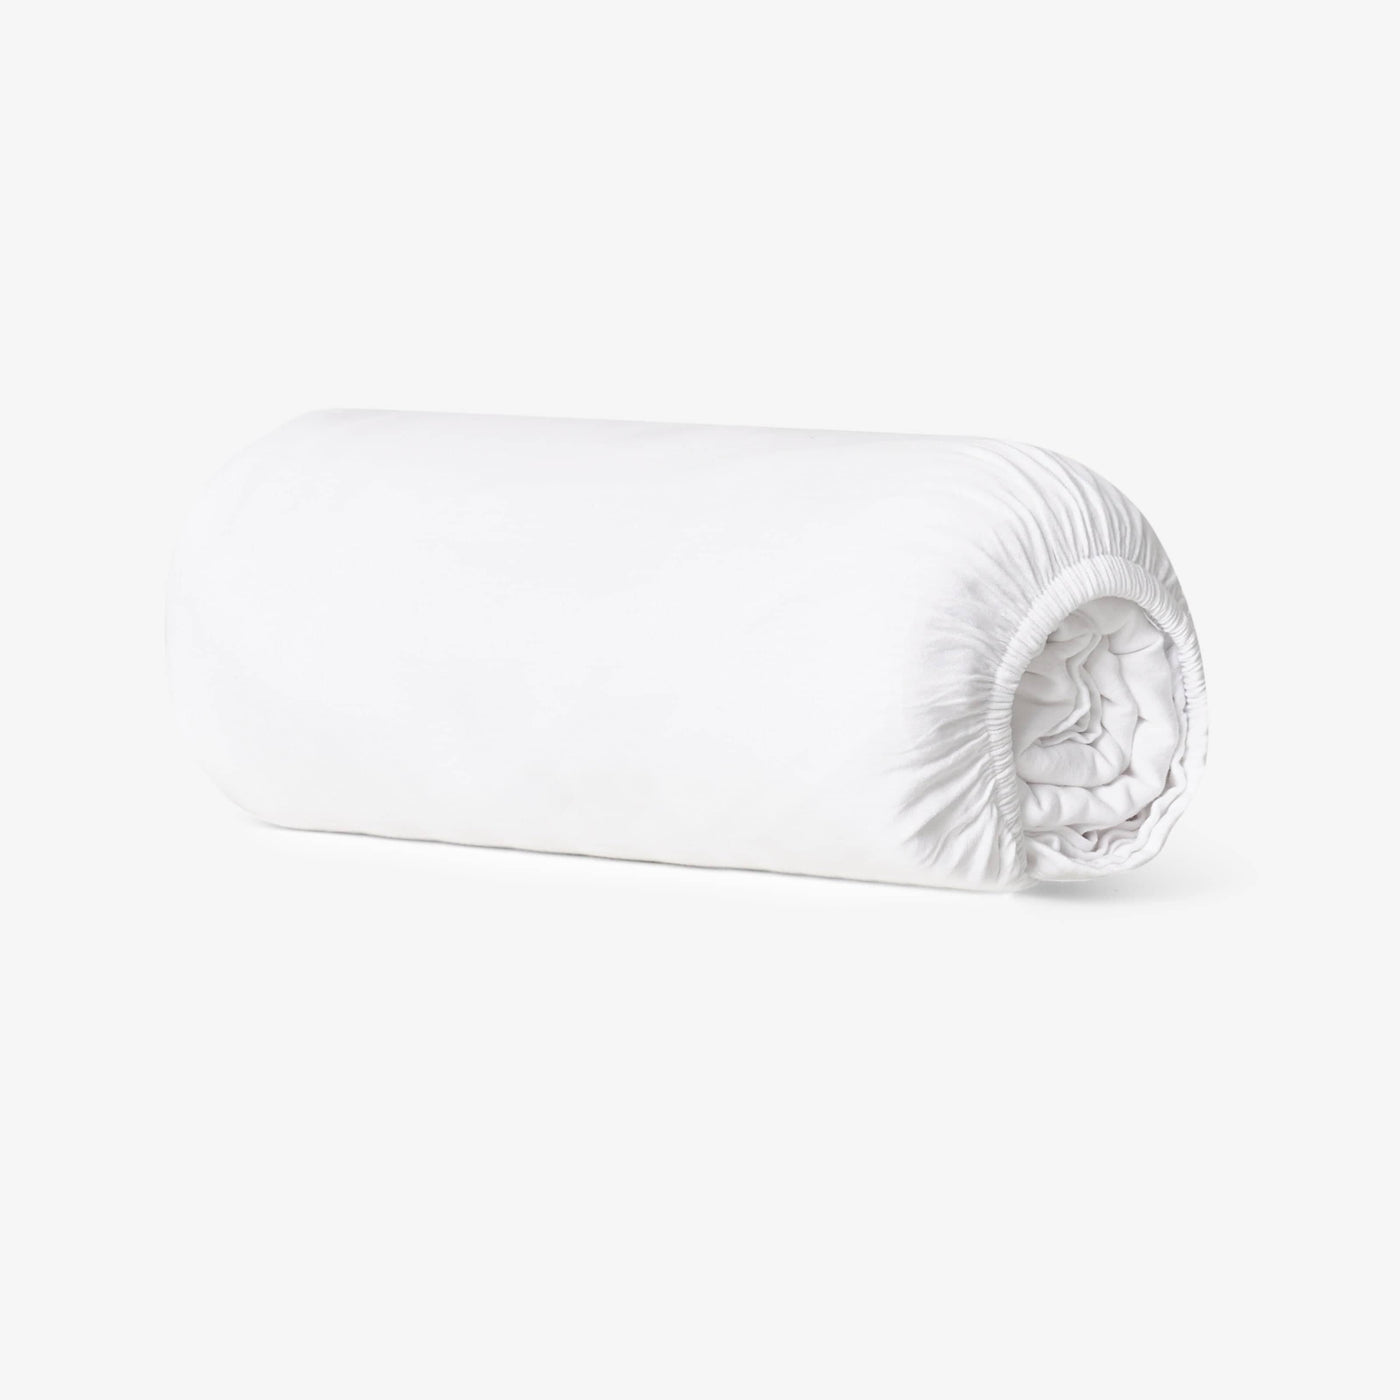 Freddie 100% Turkish Cotton Jacquard 300 TC Duvet Cover Set + Fitted Sheet, White, Double Size Bedding Sets sazy.com